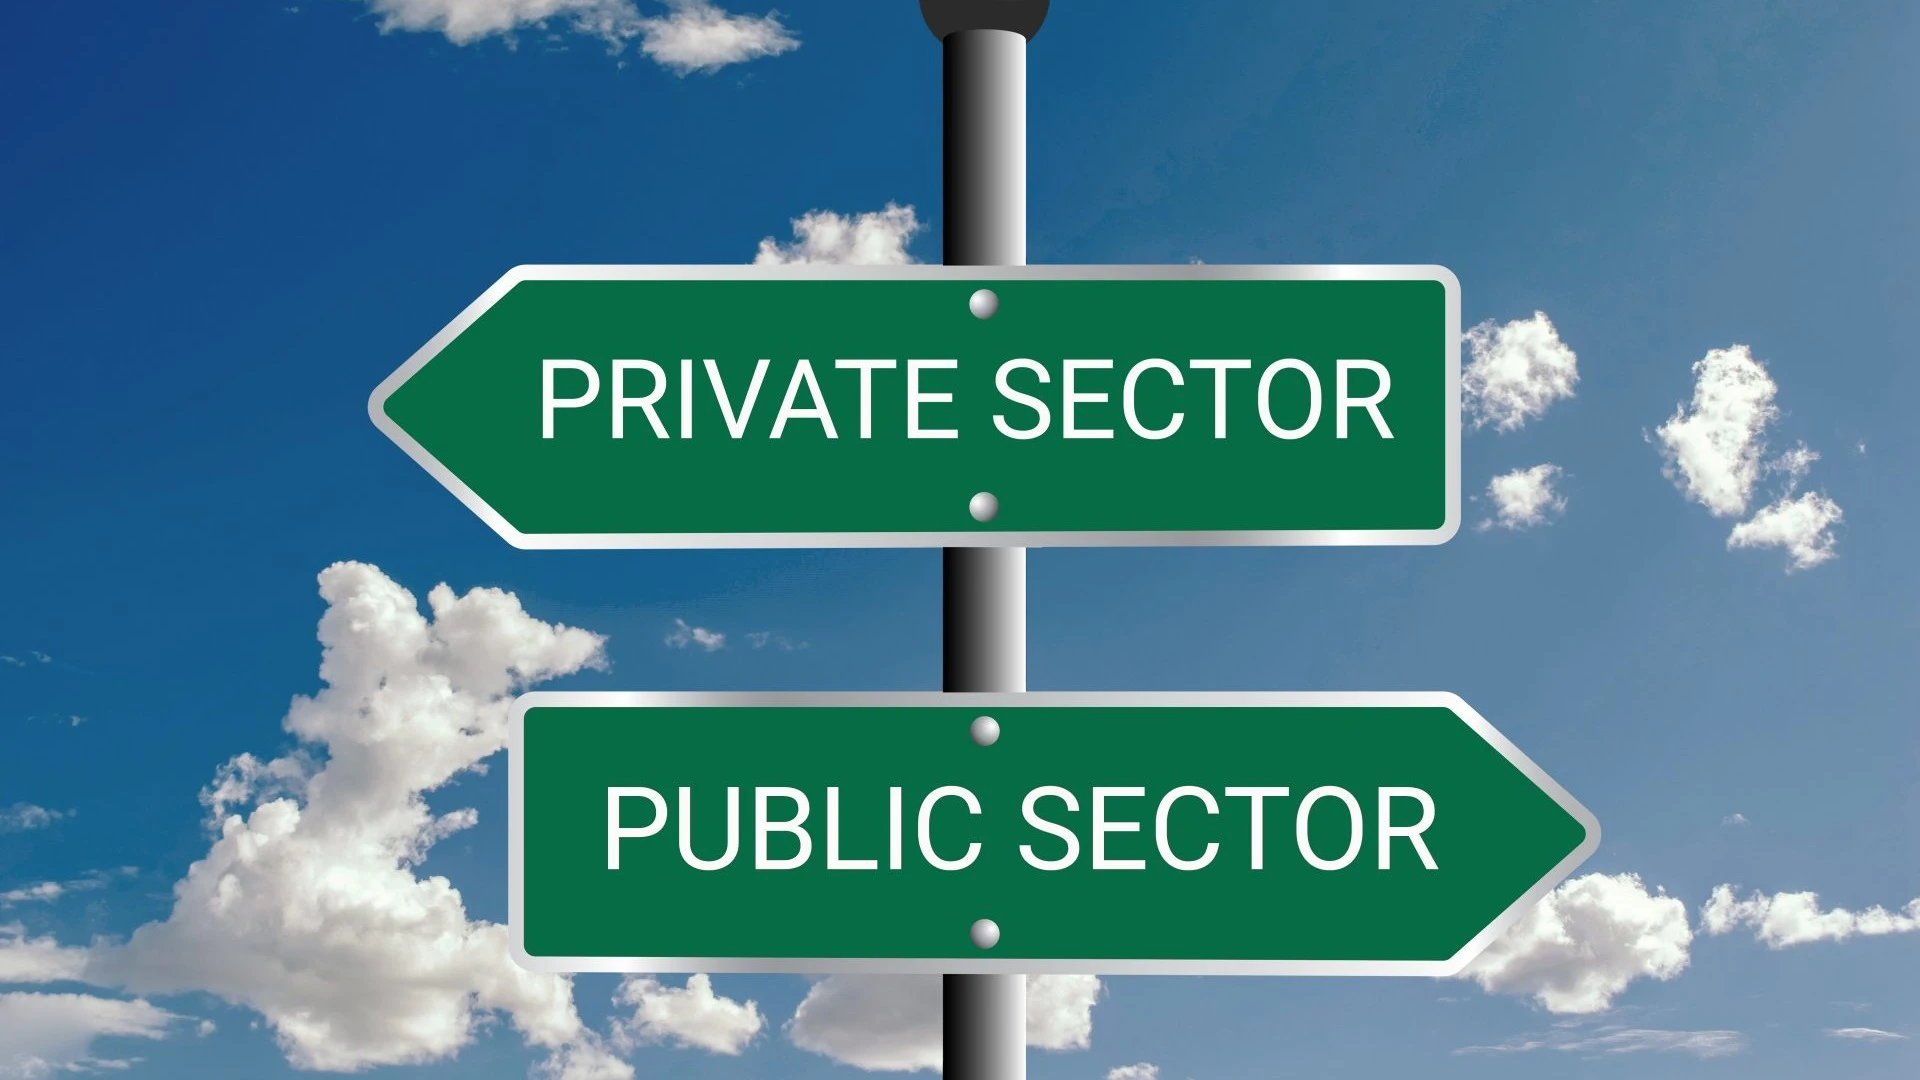 Private sector illustration